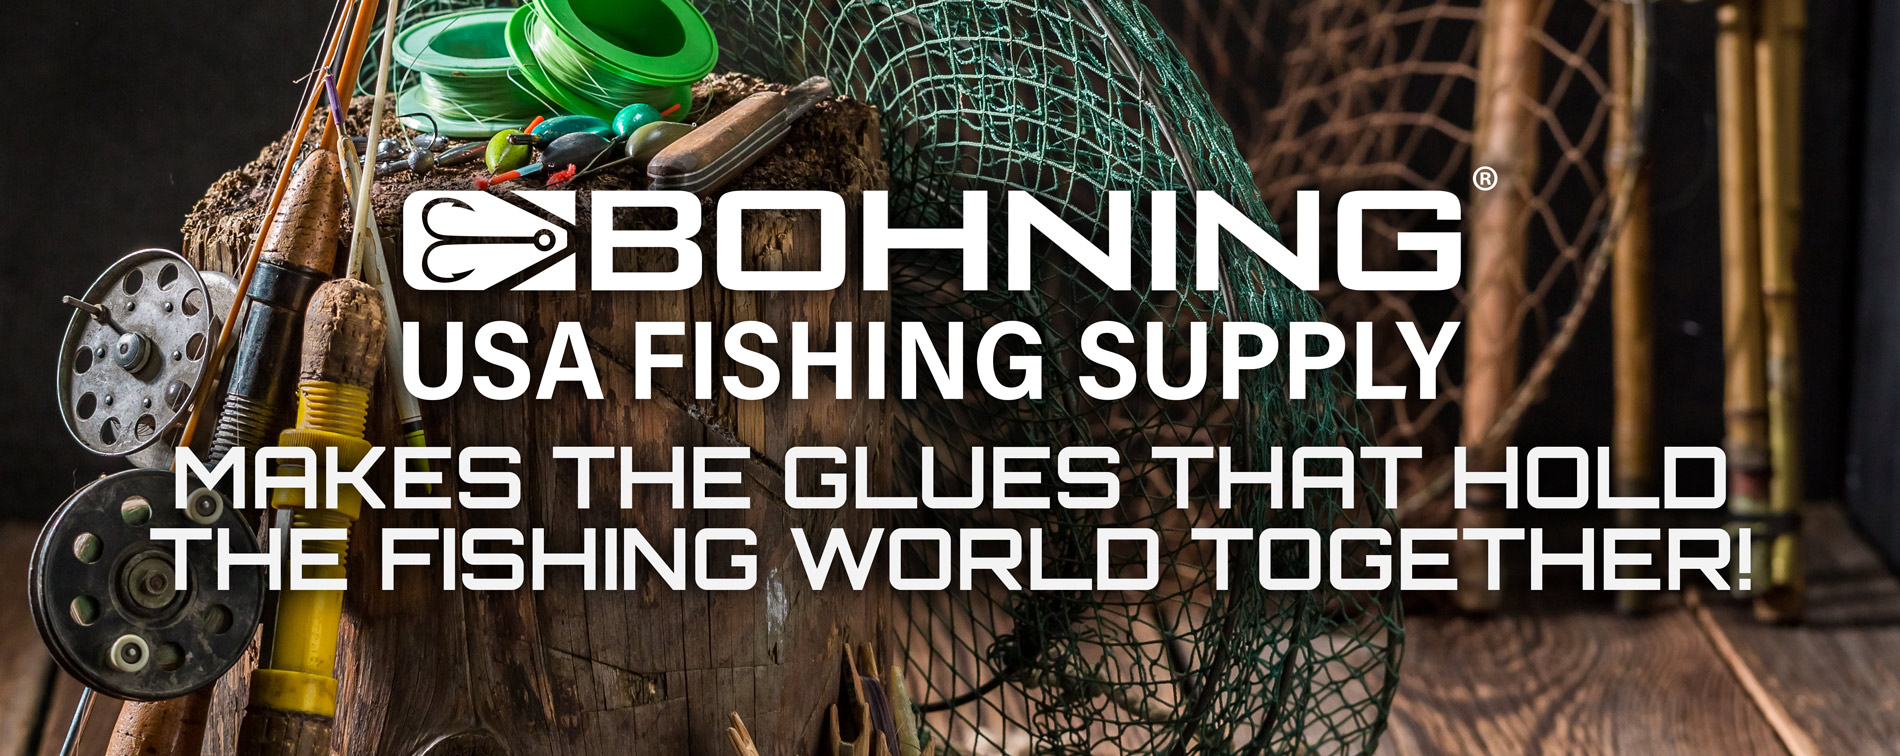 USA Fishing Supply - Bohning - USA Fishing Supply